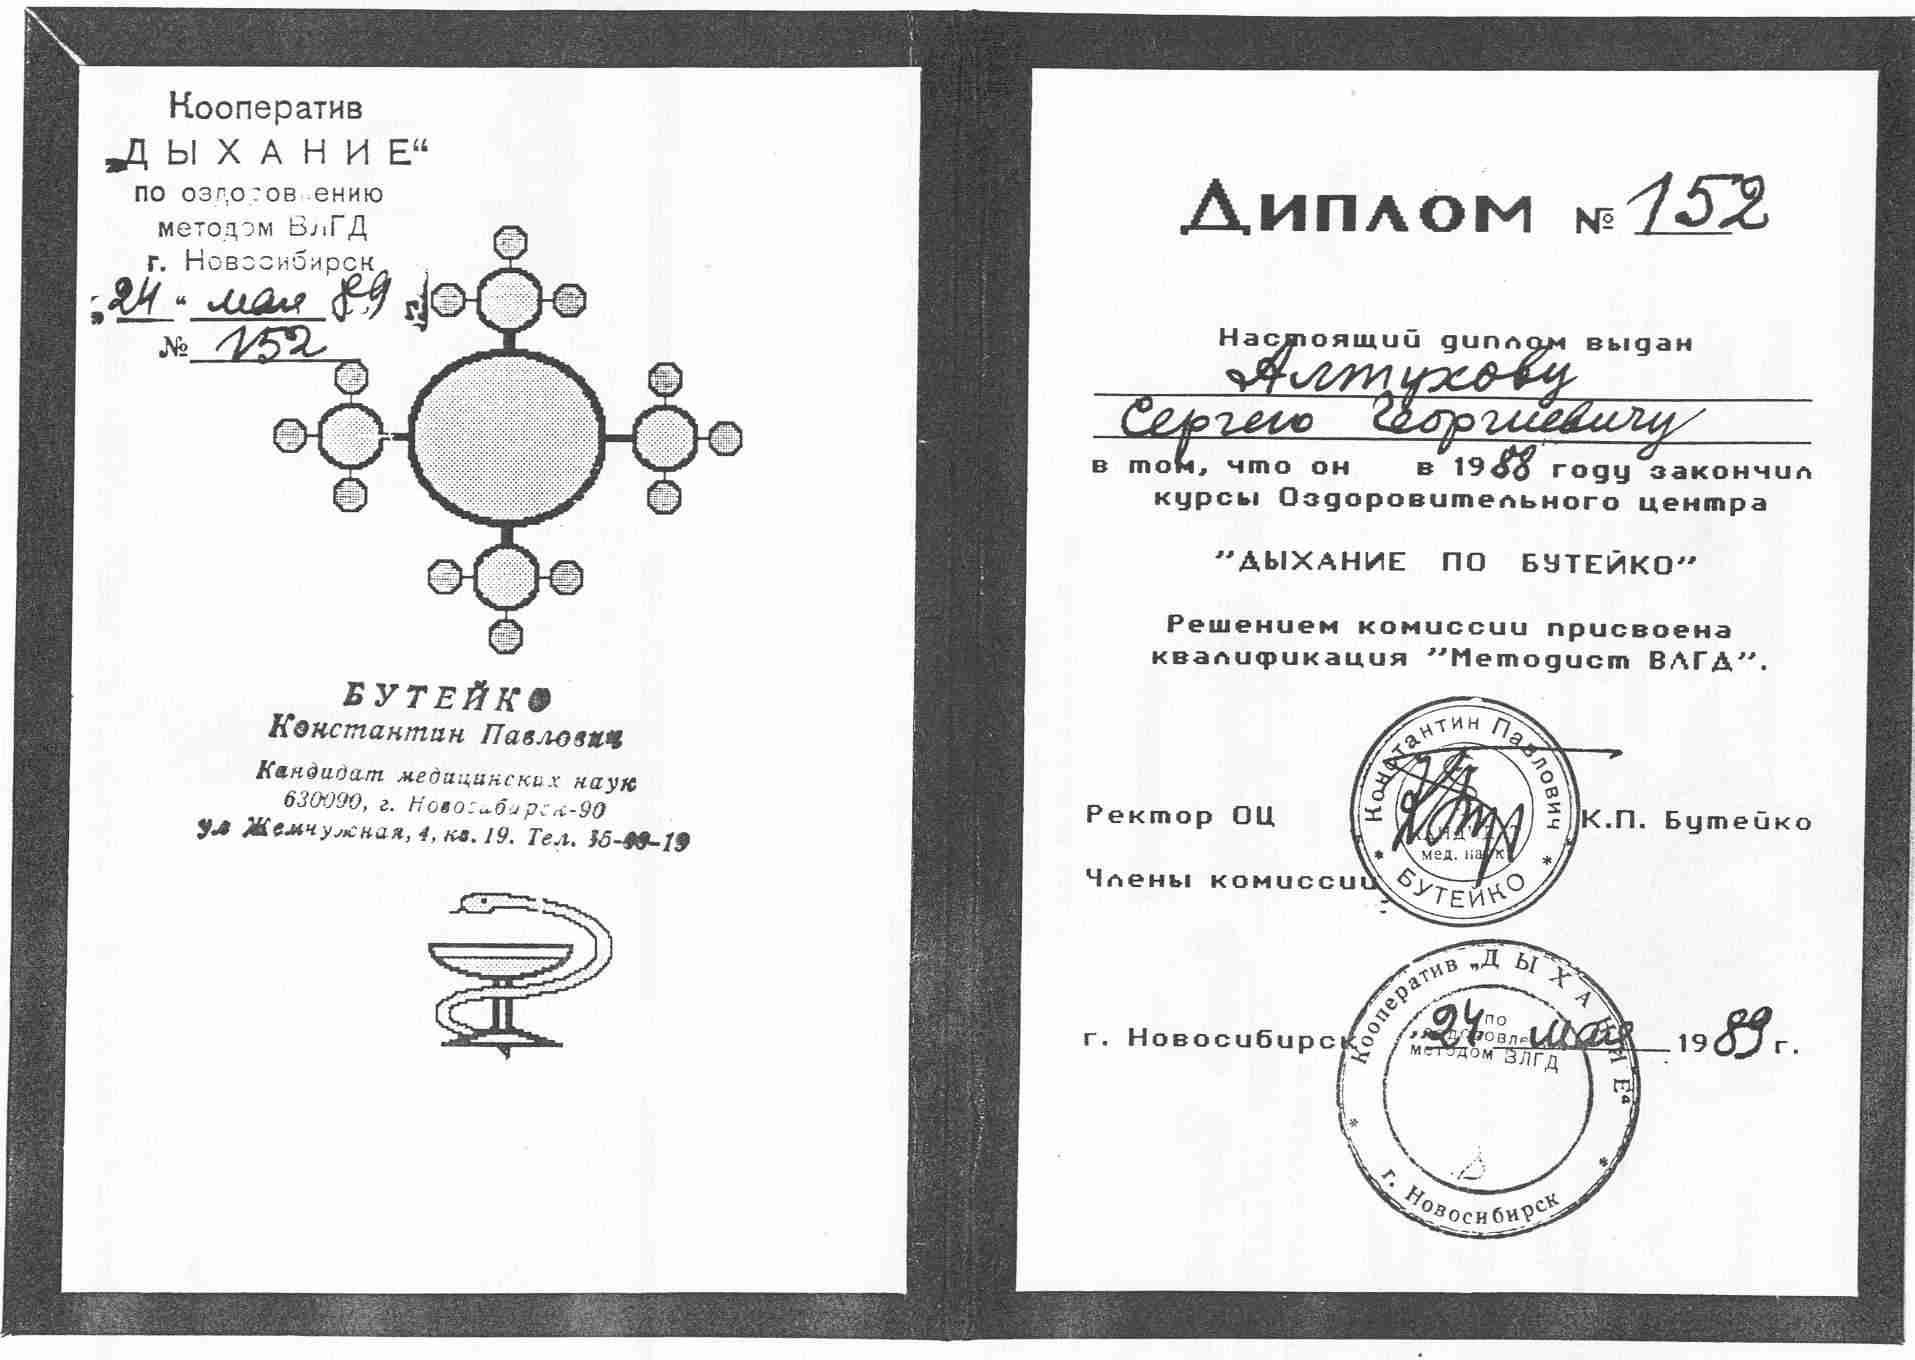 The diploma of  Altoukhov S.G.